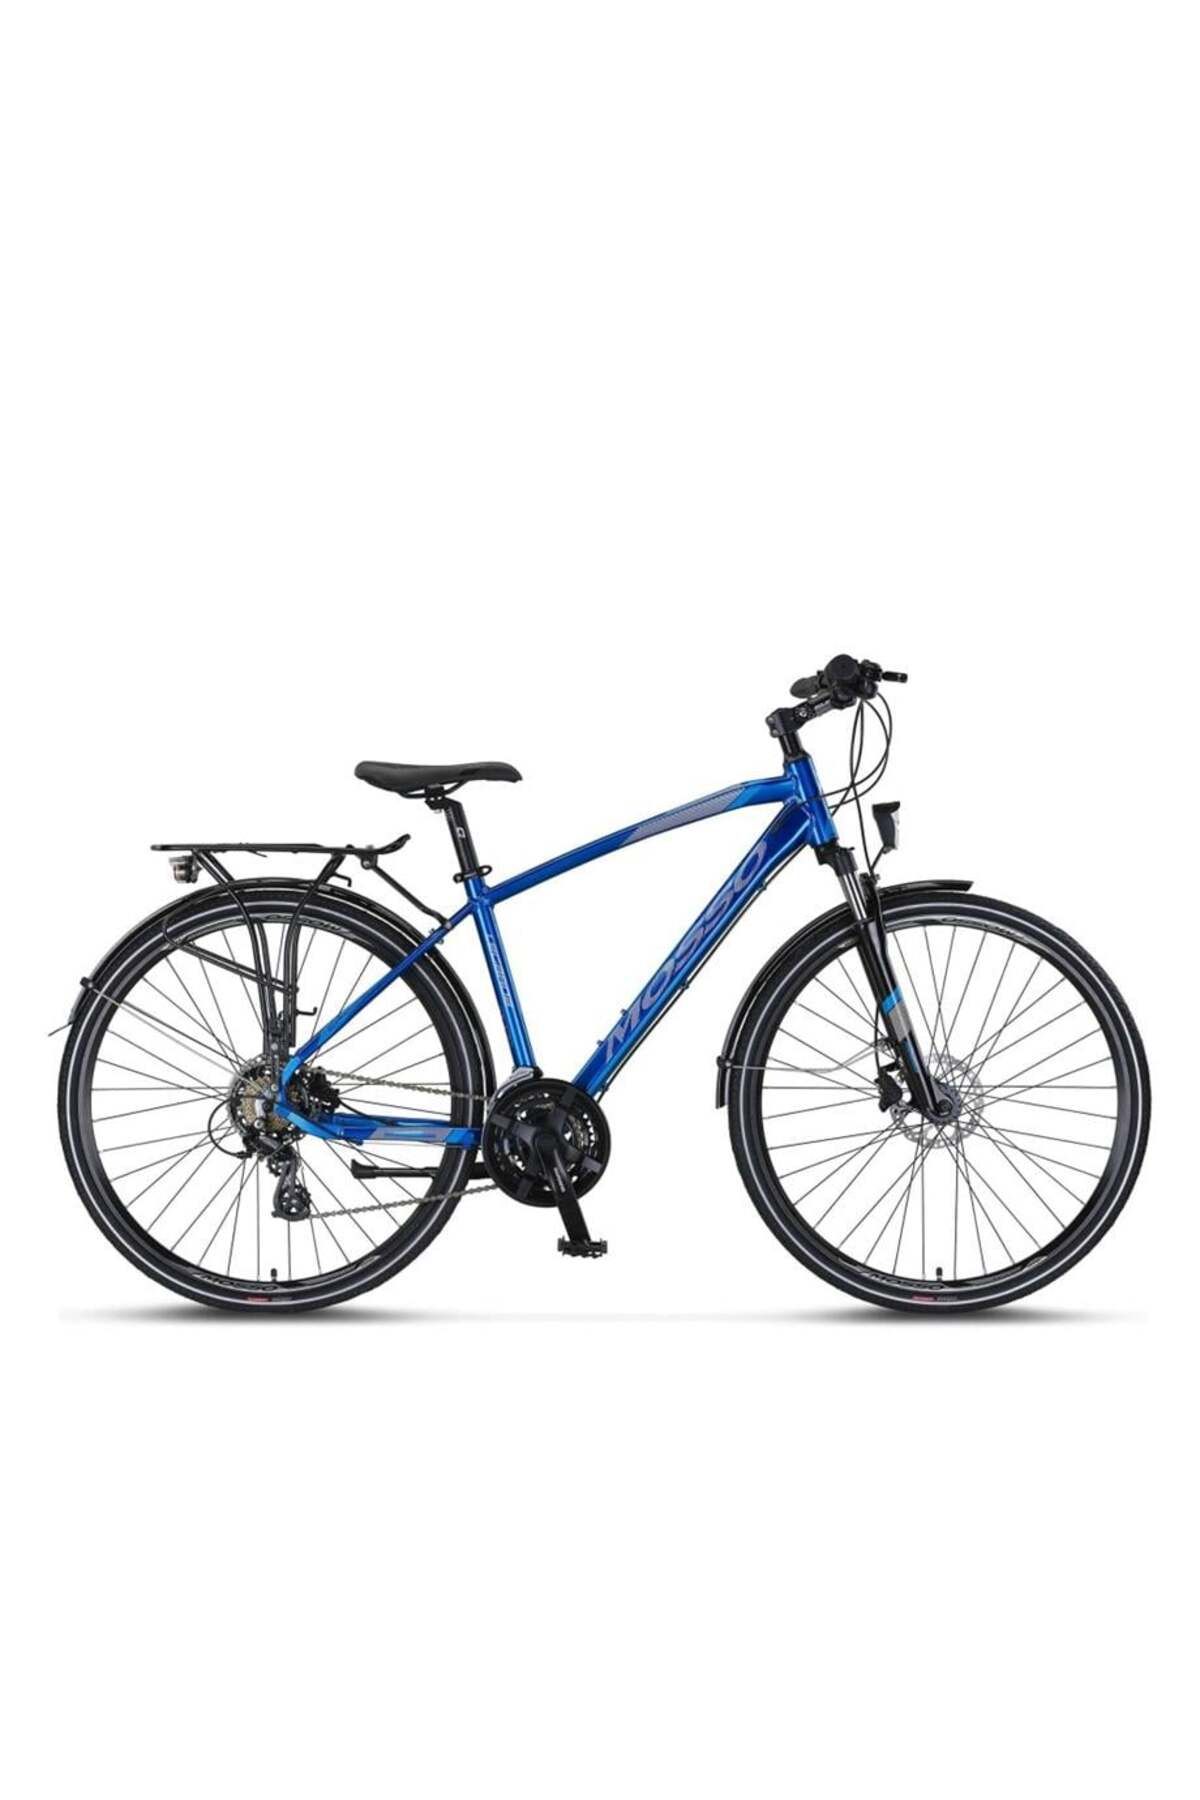 Mosso Legarda-2321-msm-h-ct Erkek Şehir Bisikleti 410h 28 Jant 21 Vites Lacivert Mavi